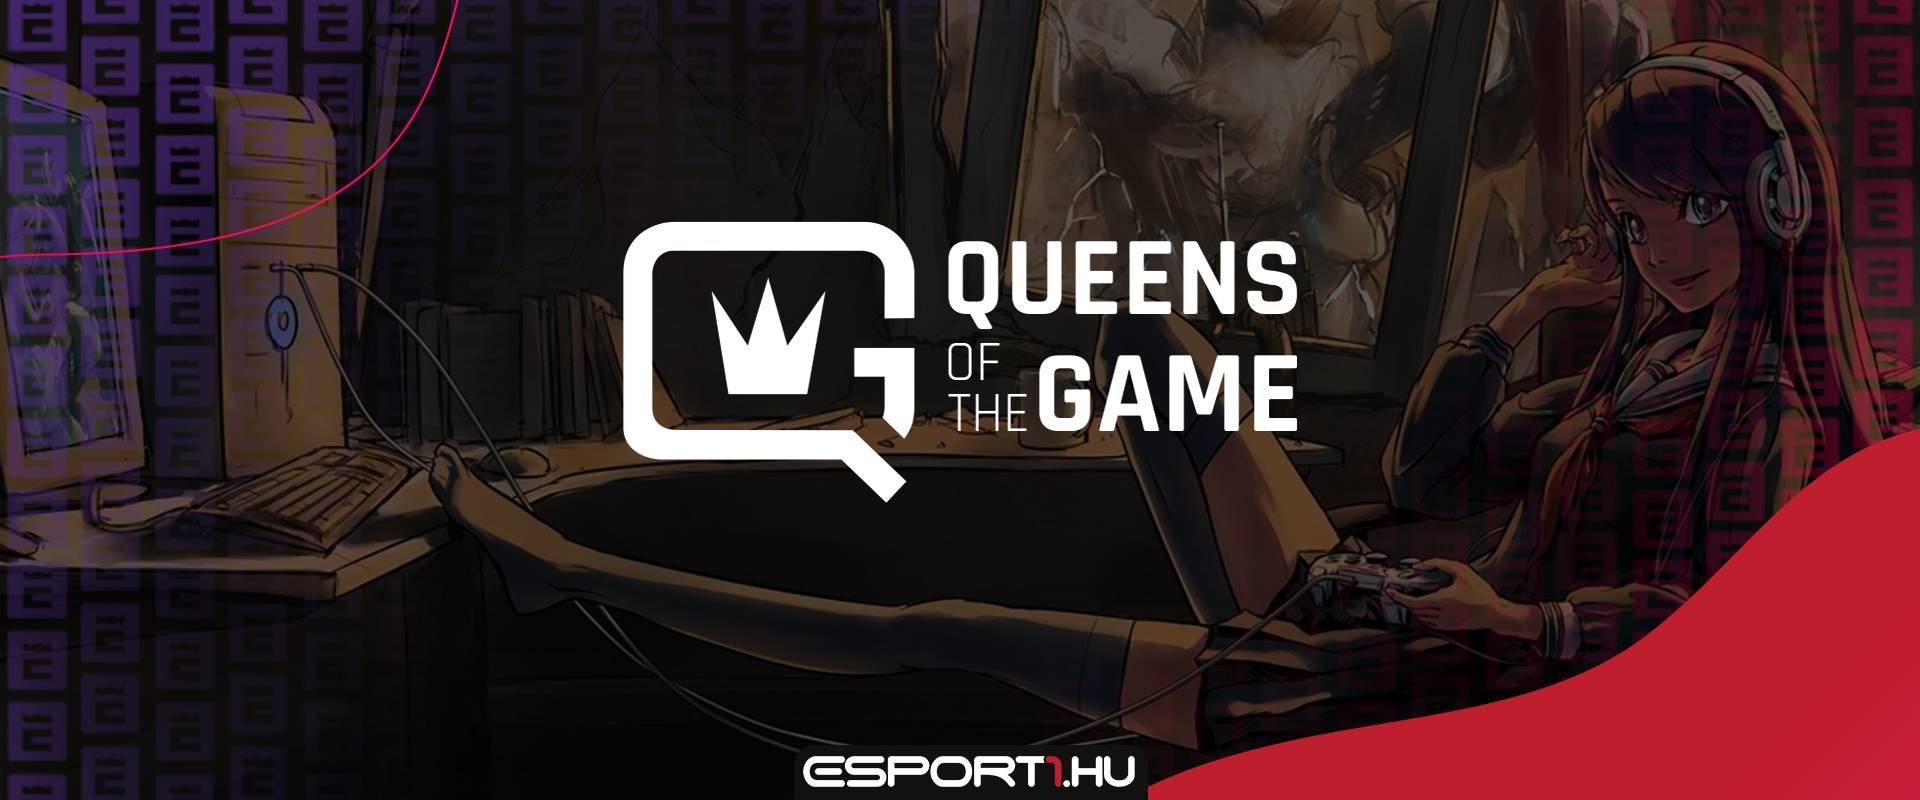 A hazai e-sport és gaming piac királynői - Folytatódik a Queens of the Game